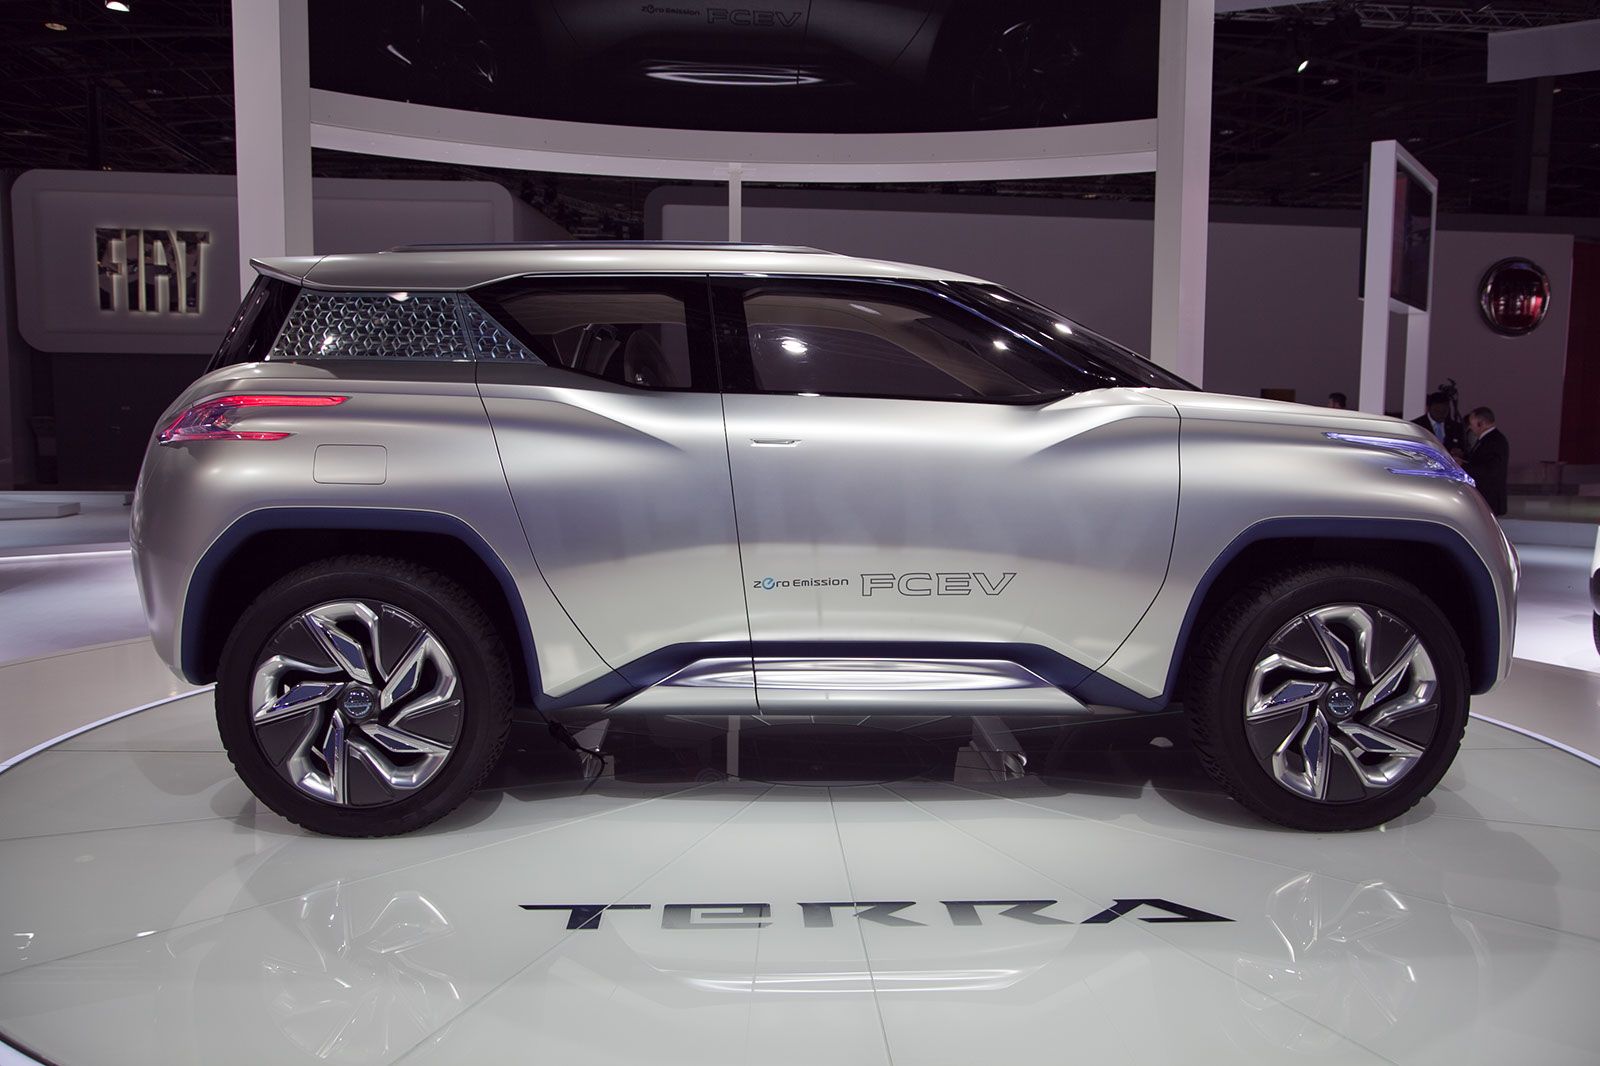 2013 Nissan Terra SUV Concept